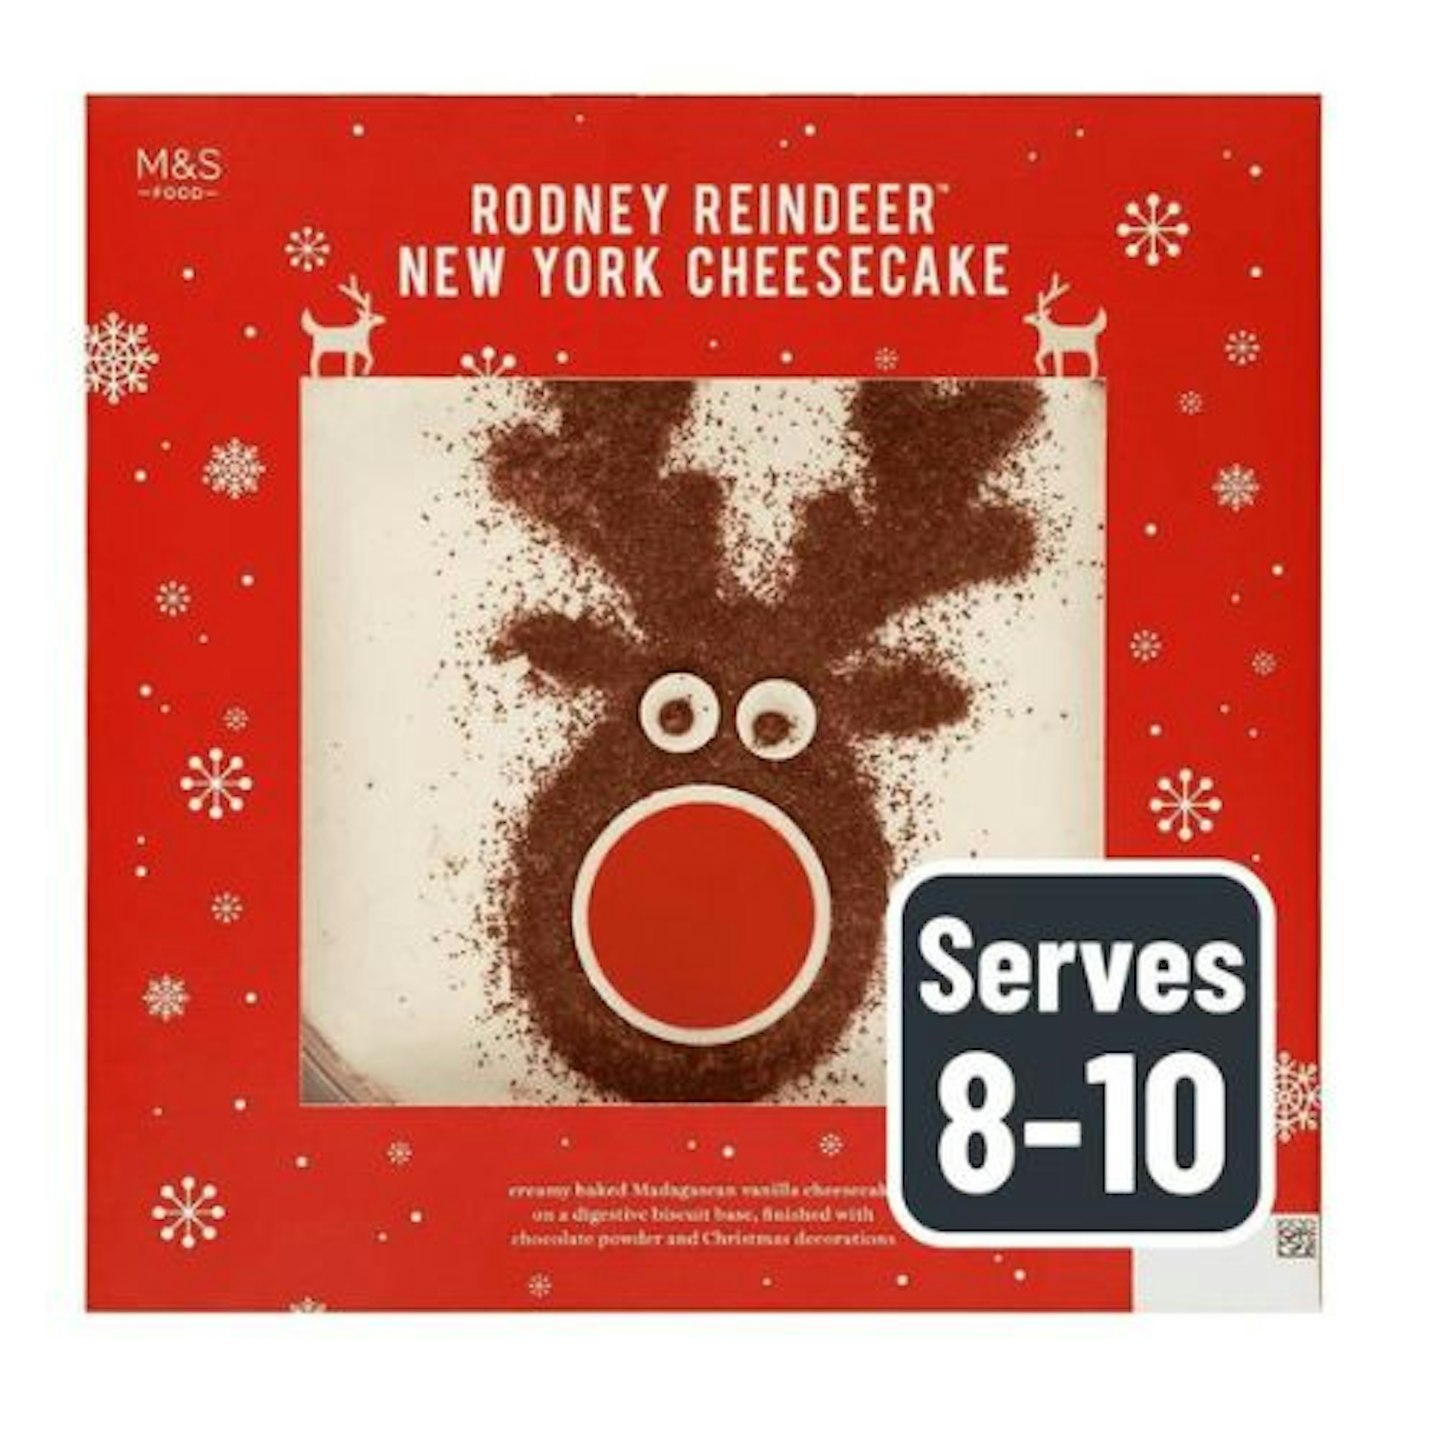 M&S Rodney Reindeer New York Cheesecake